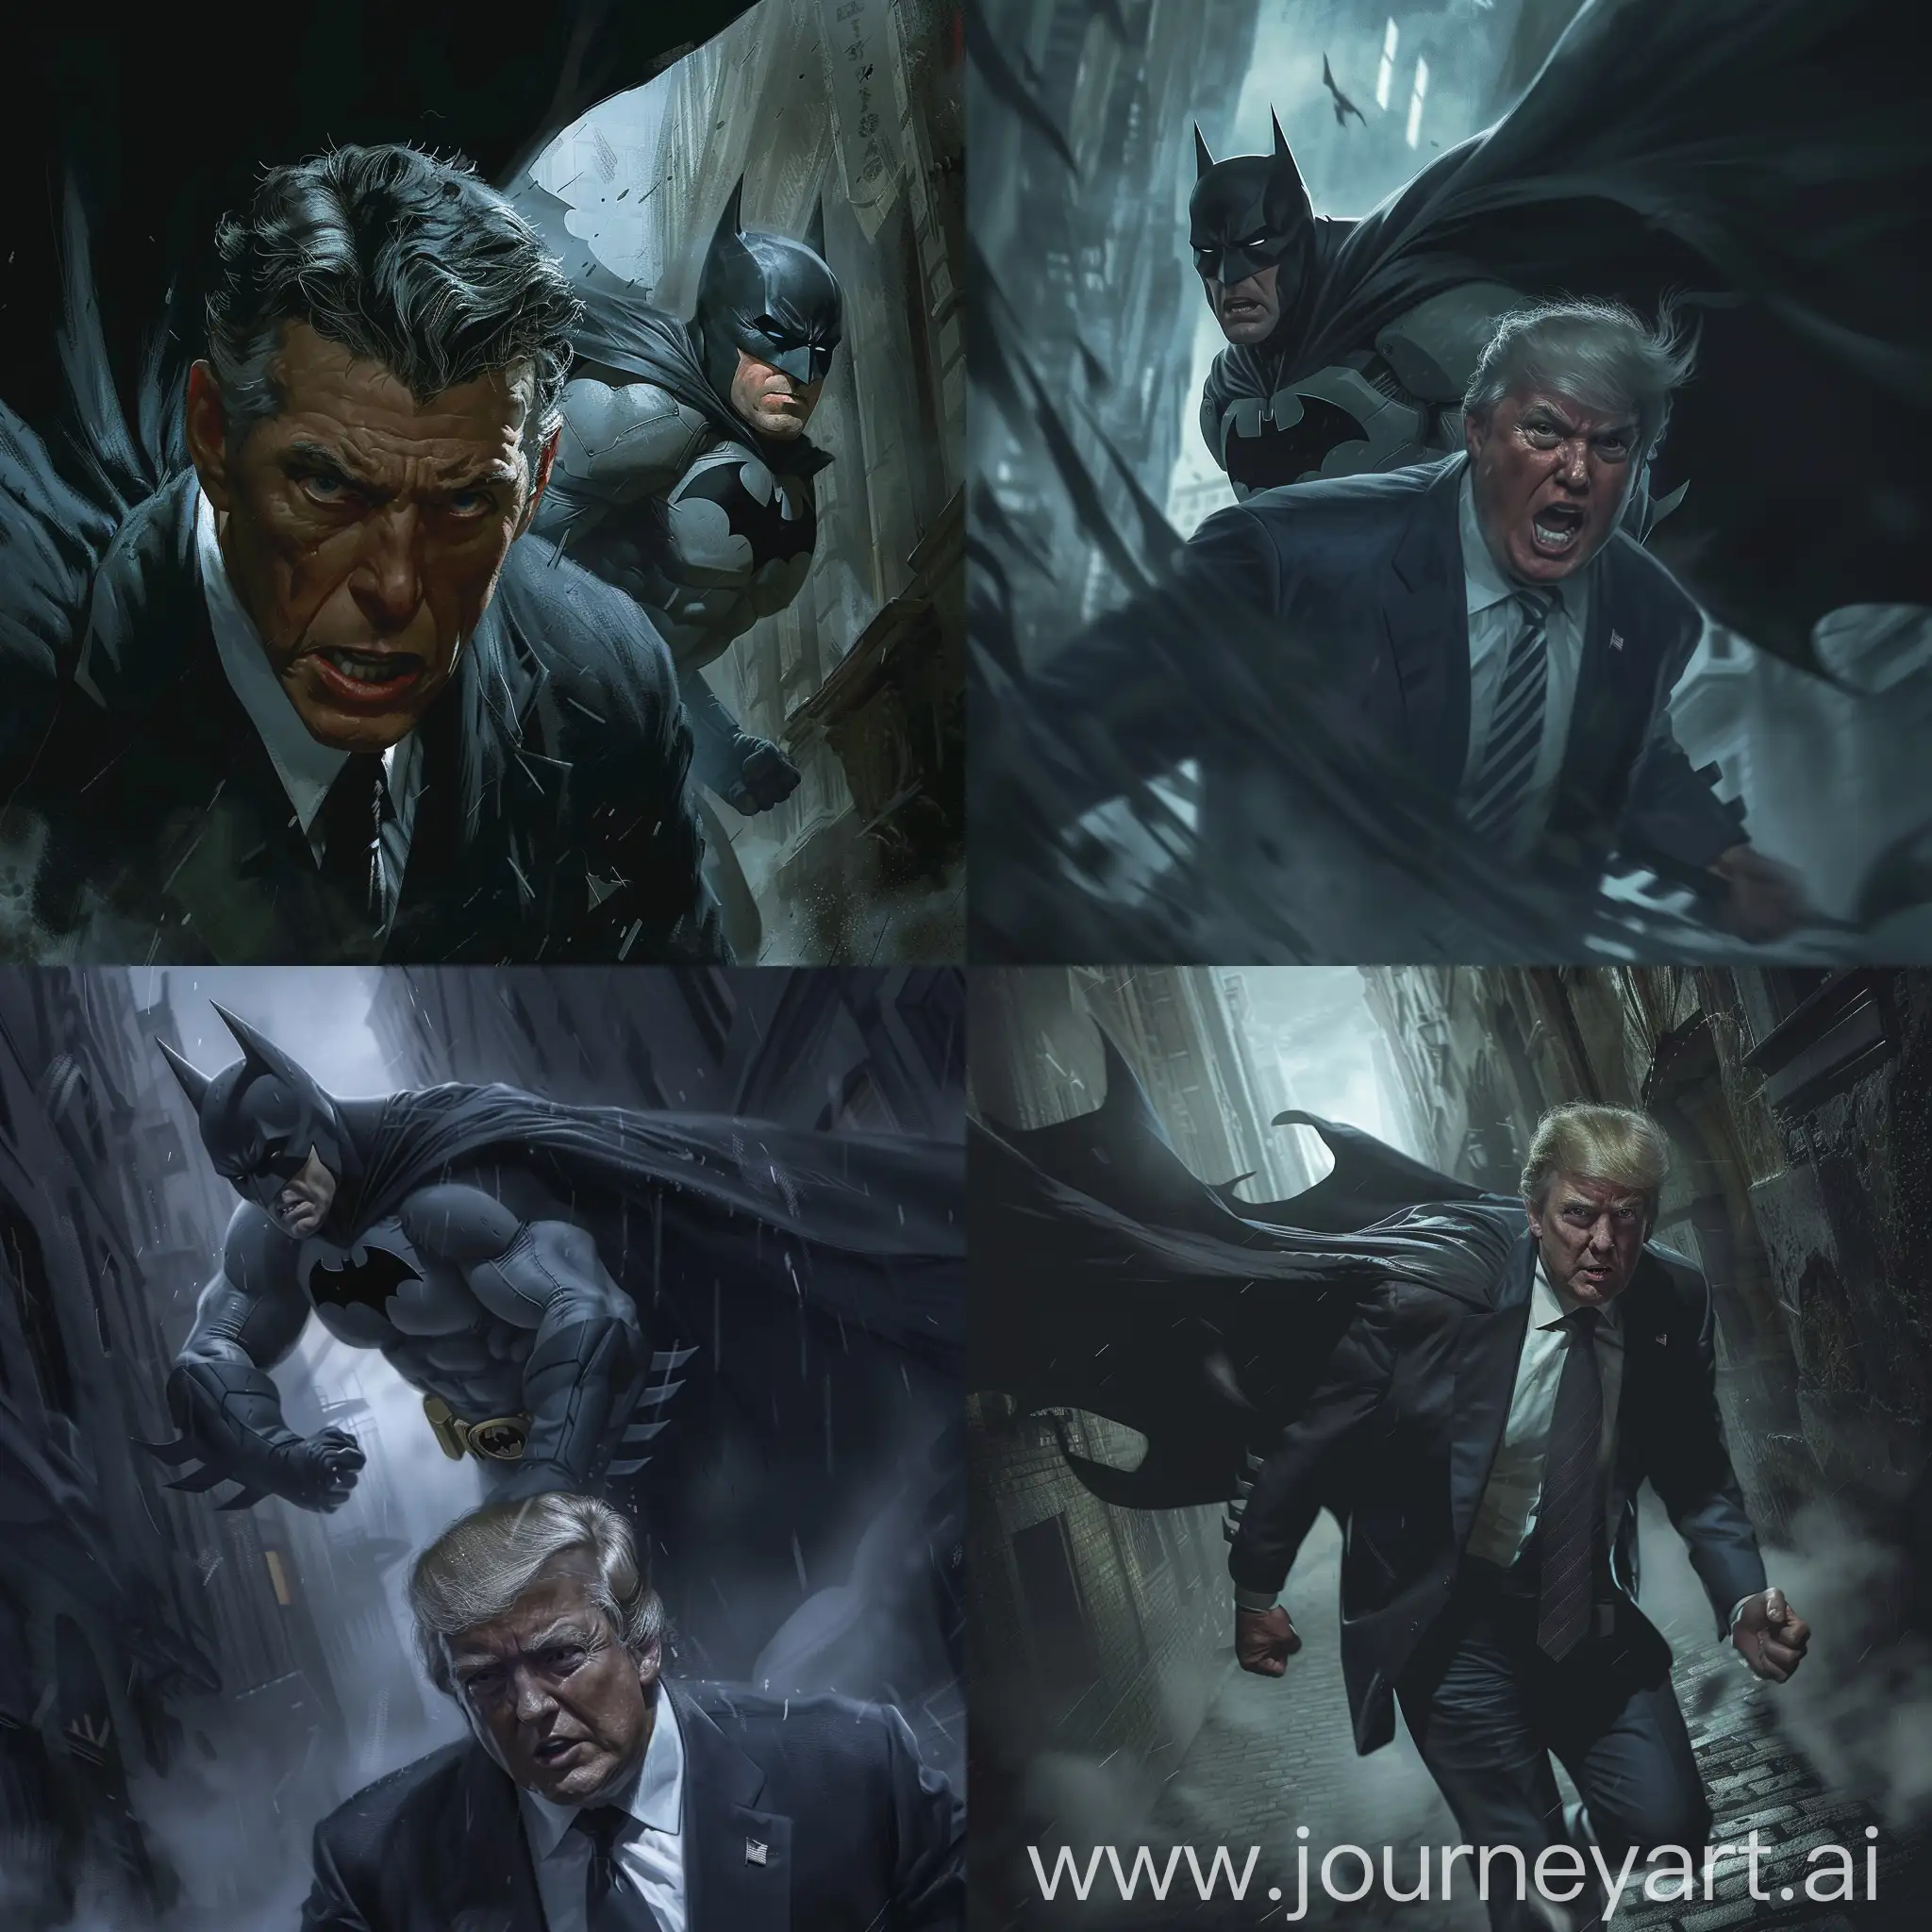 Fleeing-Politician-Evades-Pursuit-by-Batman-on-Dark-Night